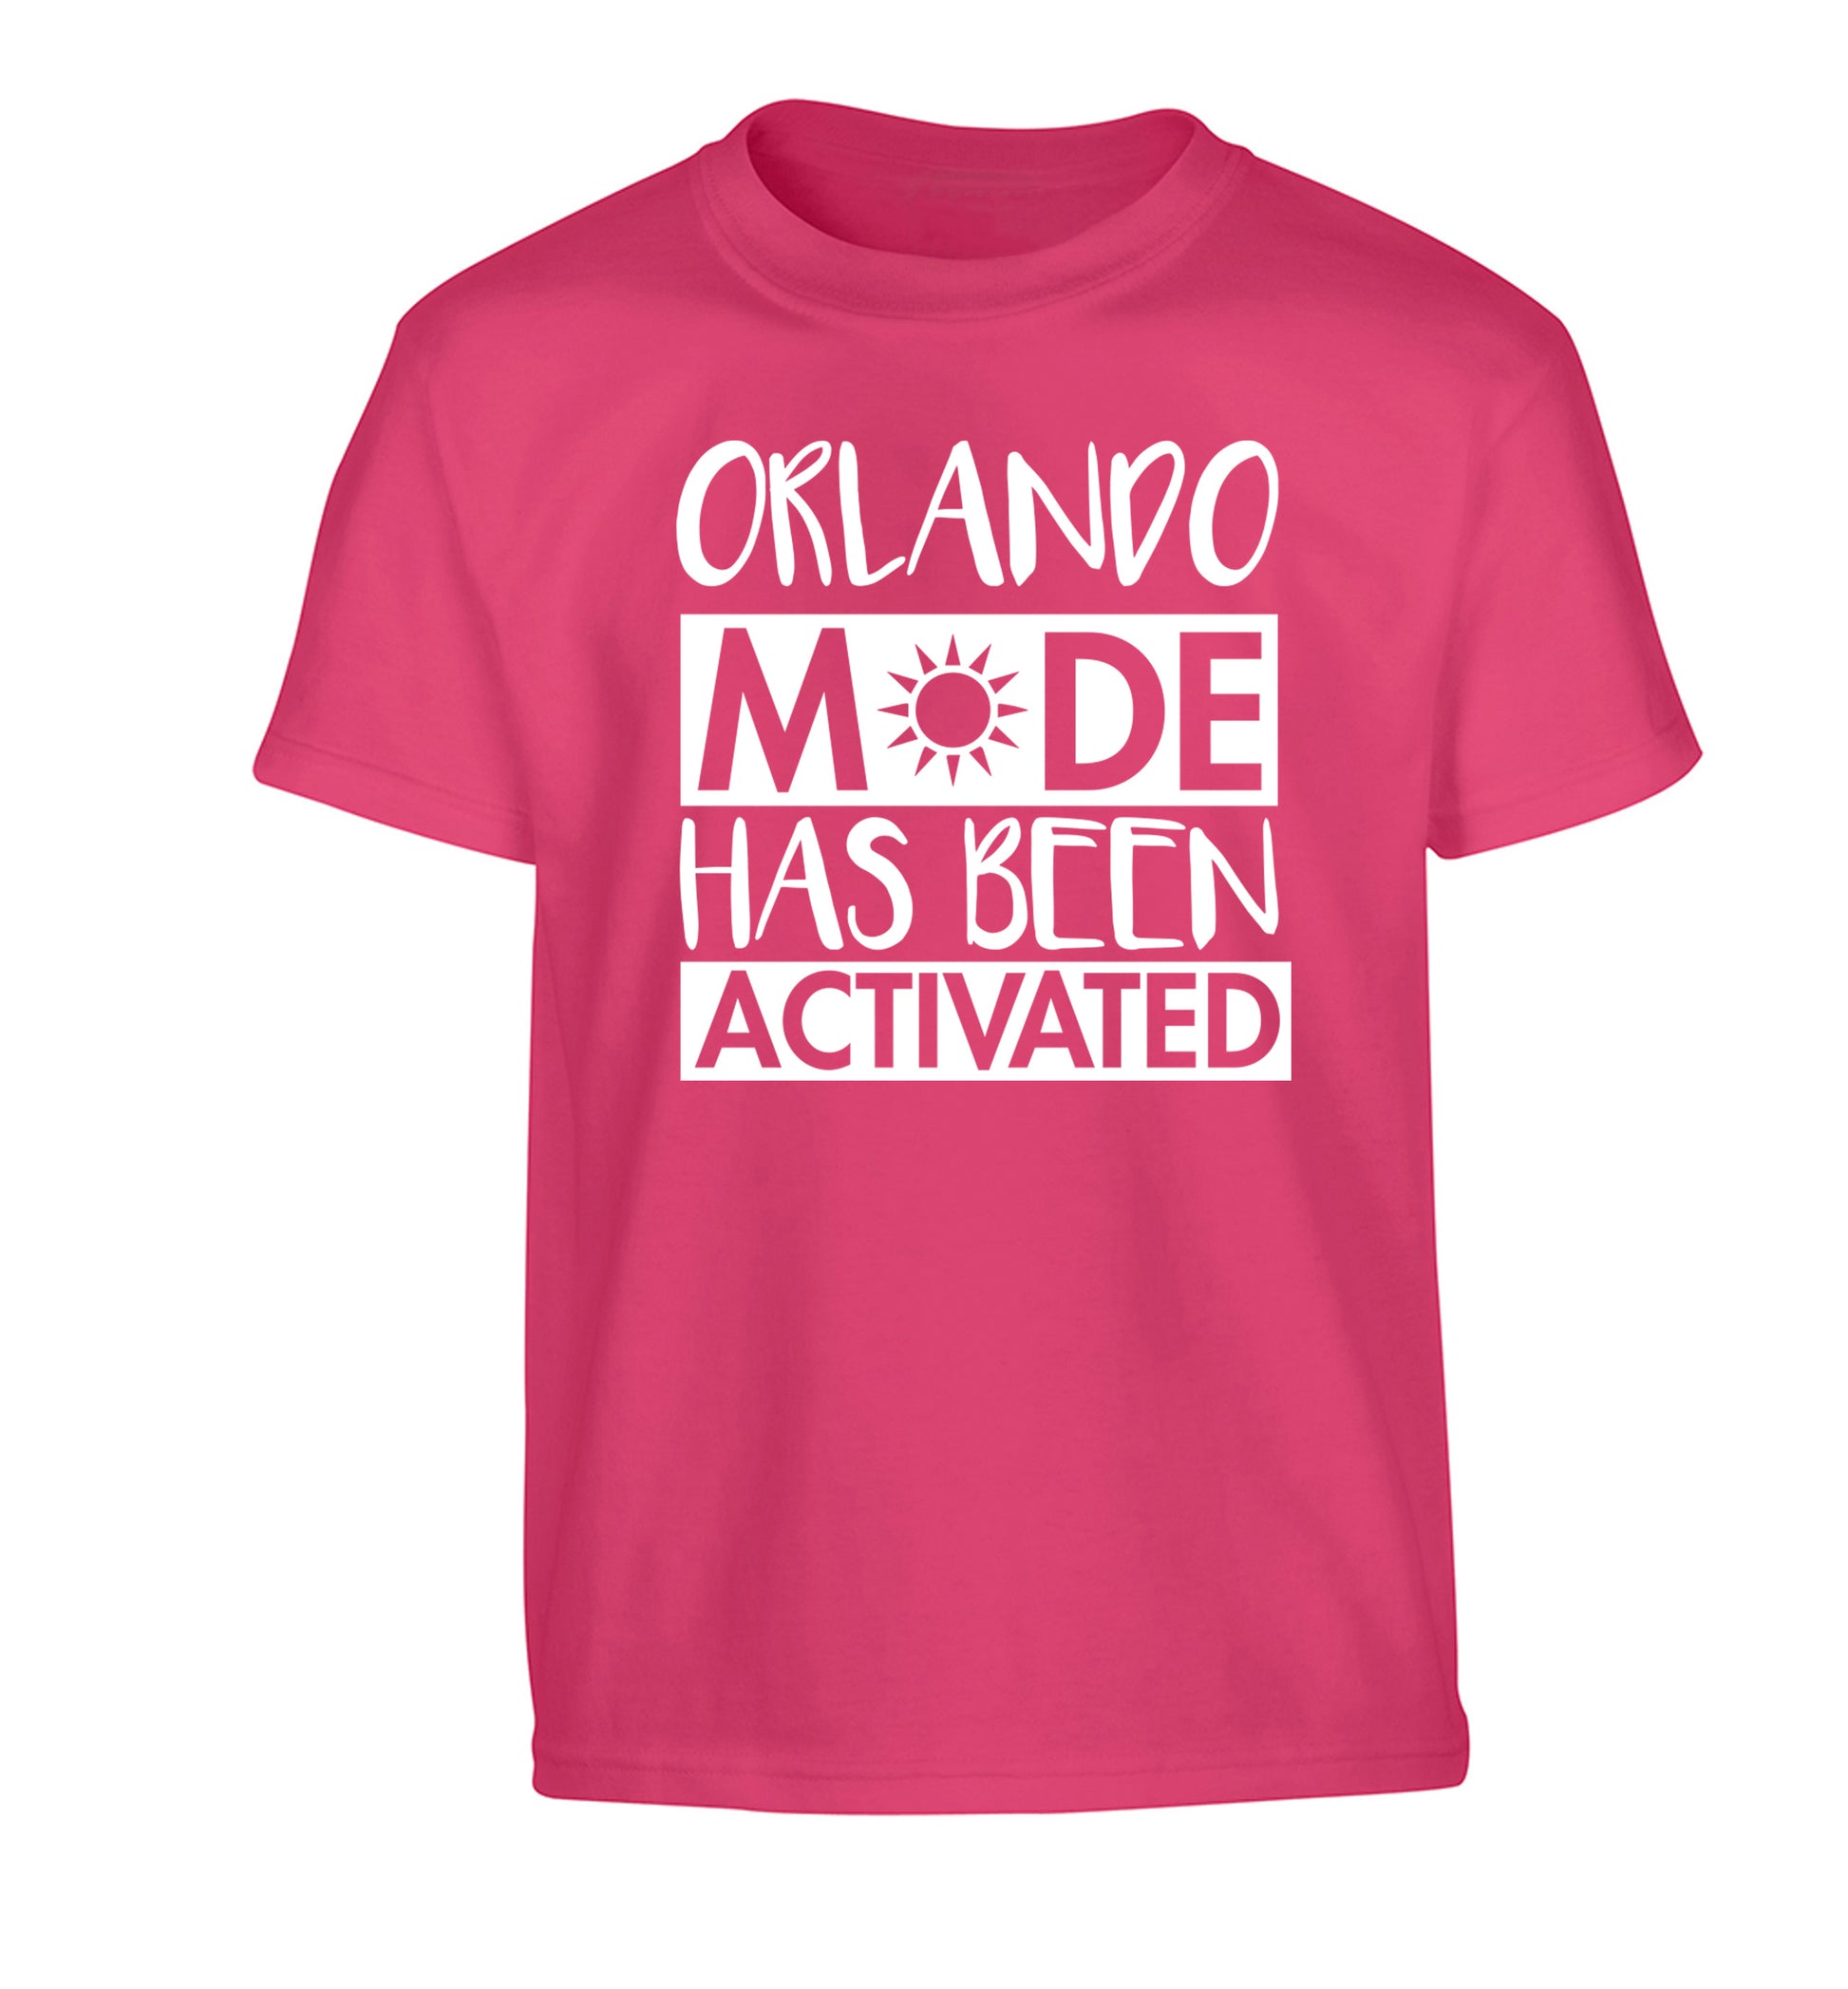 Orlando mode has been activated Children's pink Tshirt 12-13 Years